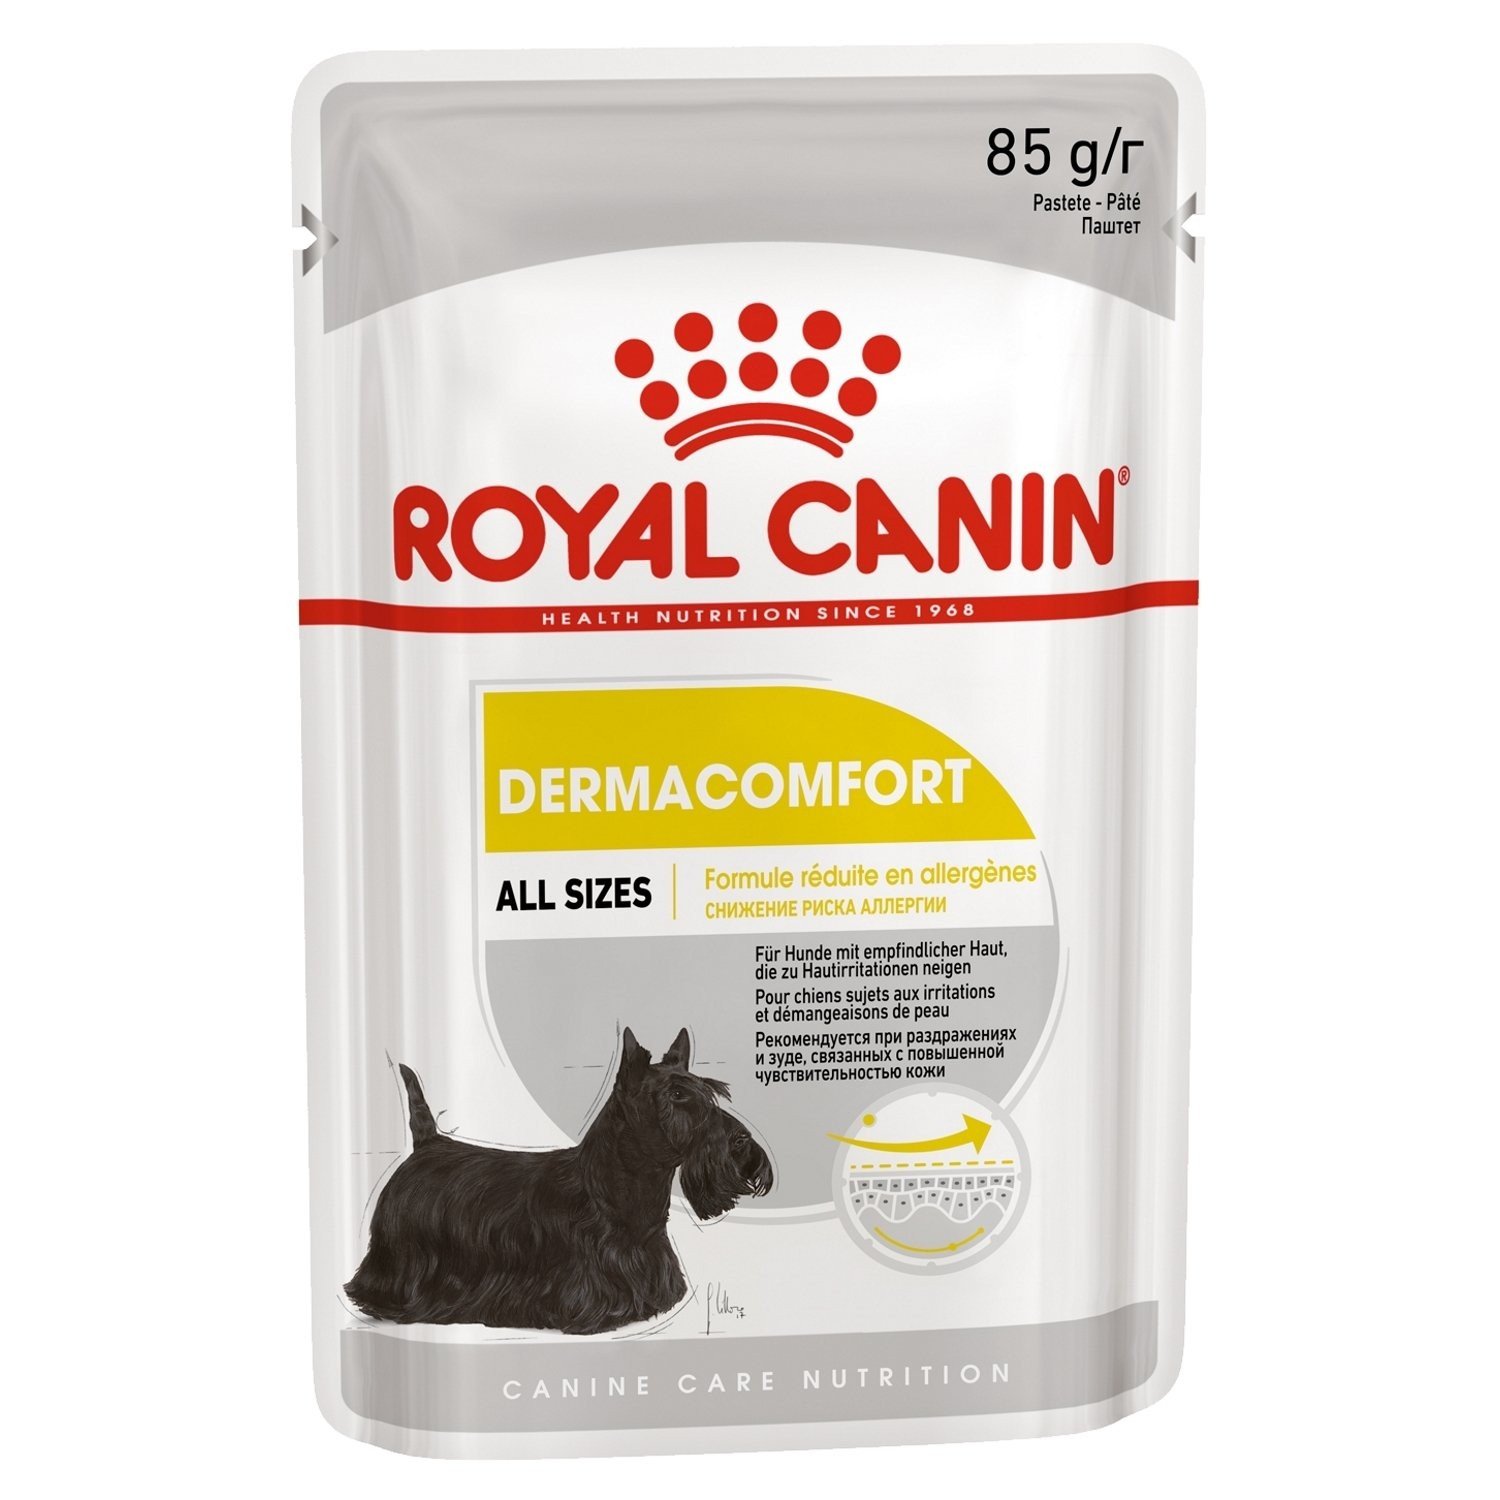 Royal Canin Dermacomfort